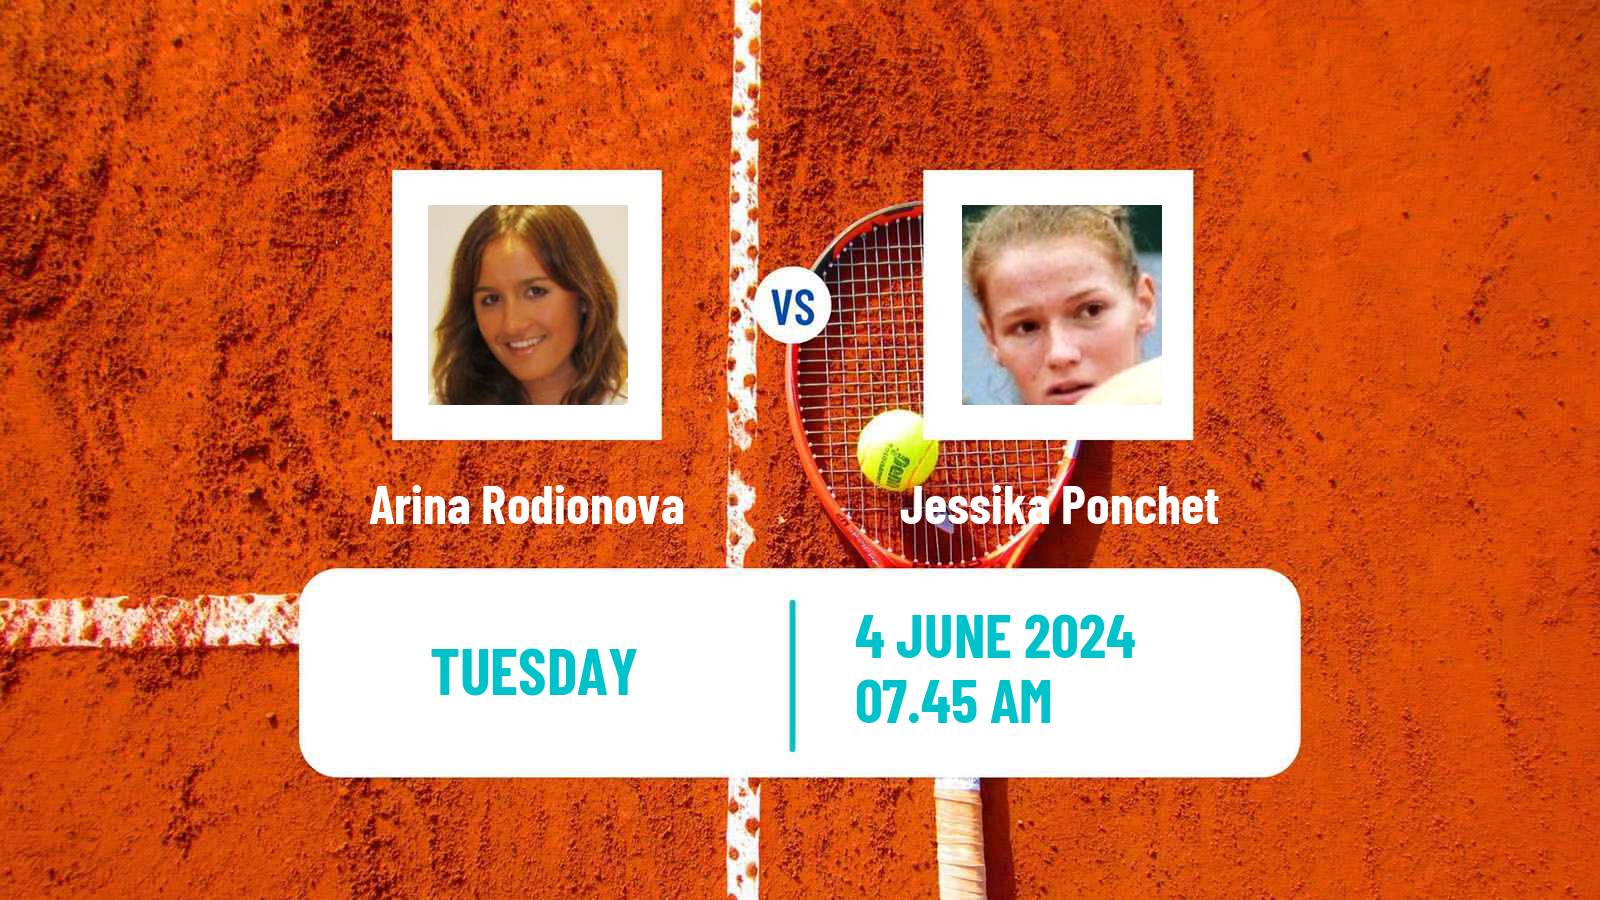 Tennis ITF W100 Surbiton Women Arina Rodionova - Jessika Ponchet